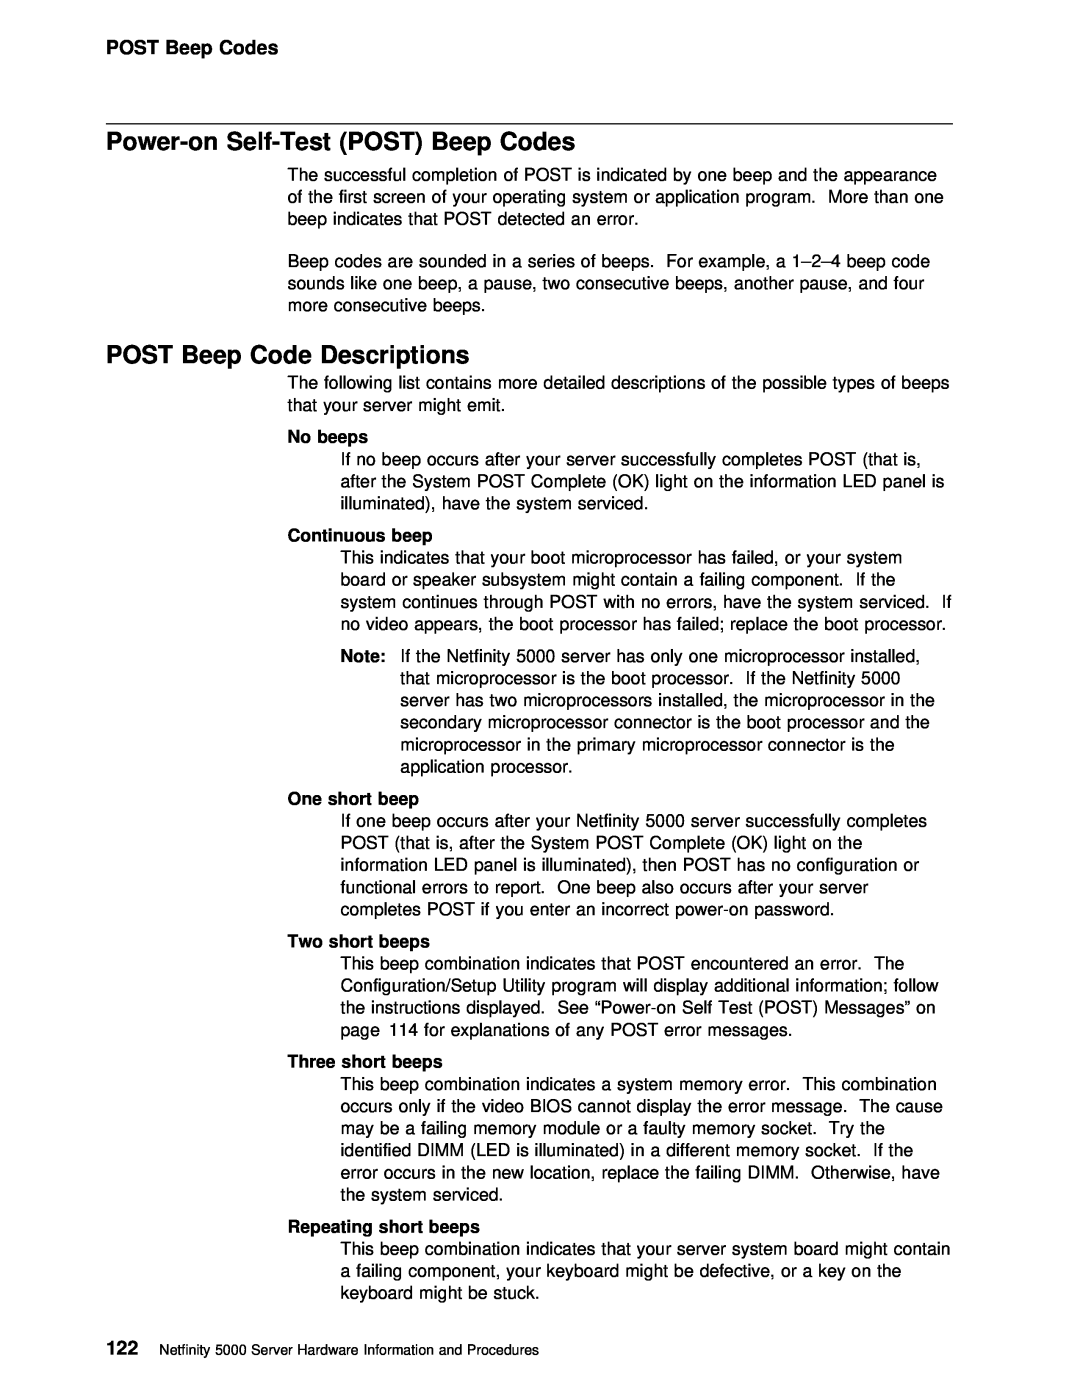 IBM 5000 manual POST Beep Code Descriptions, POST Beep Codes, Power-on Self-Test POST 